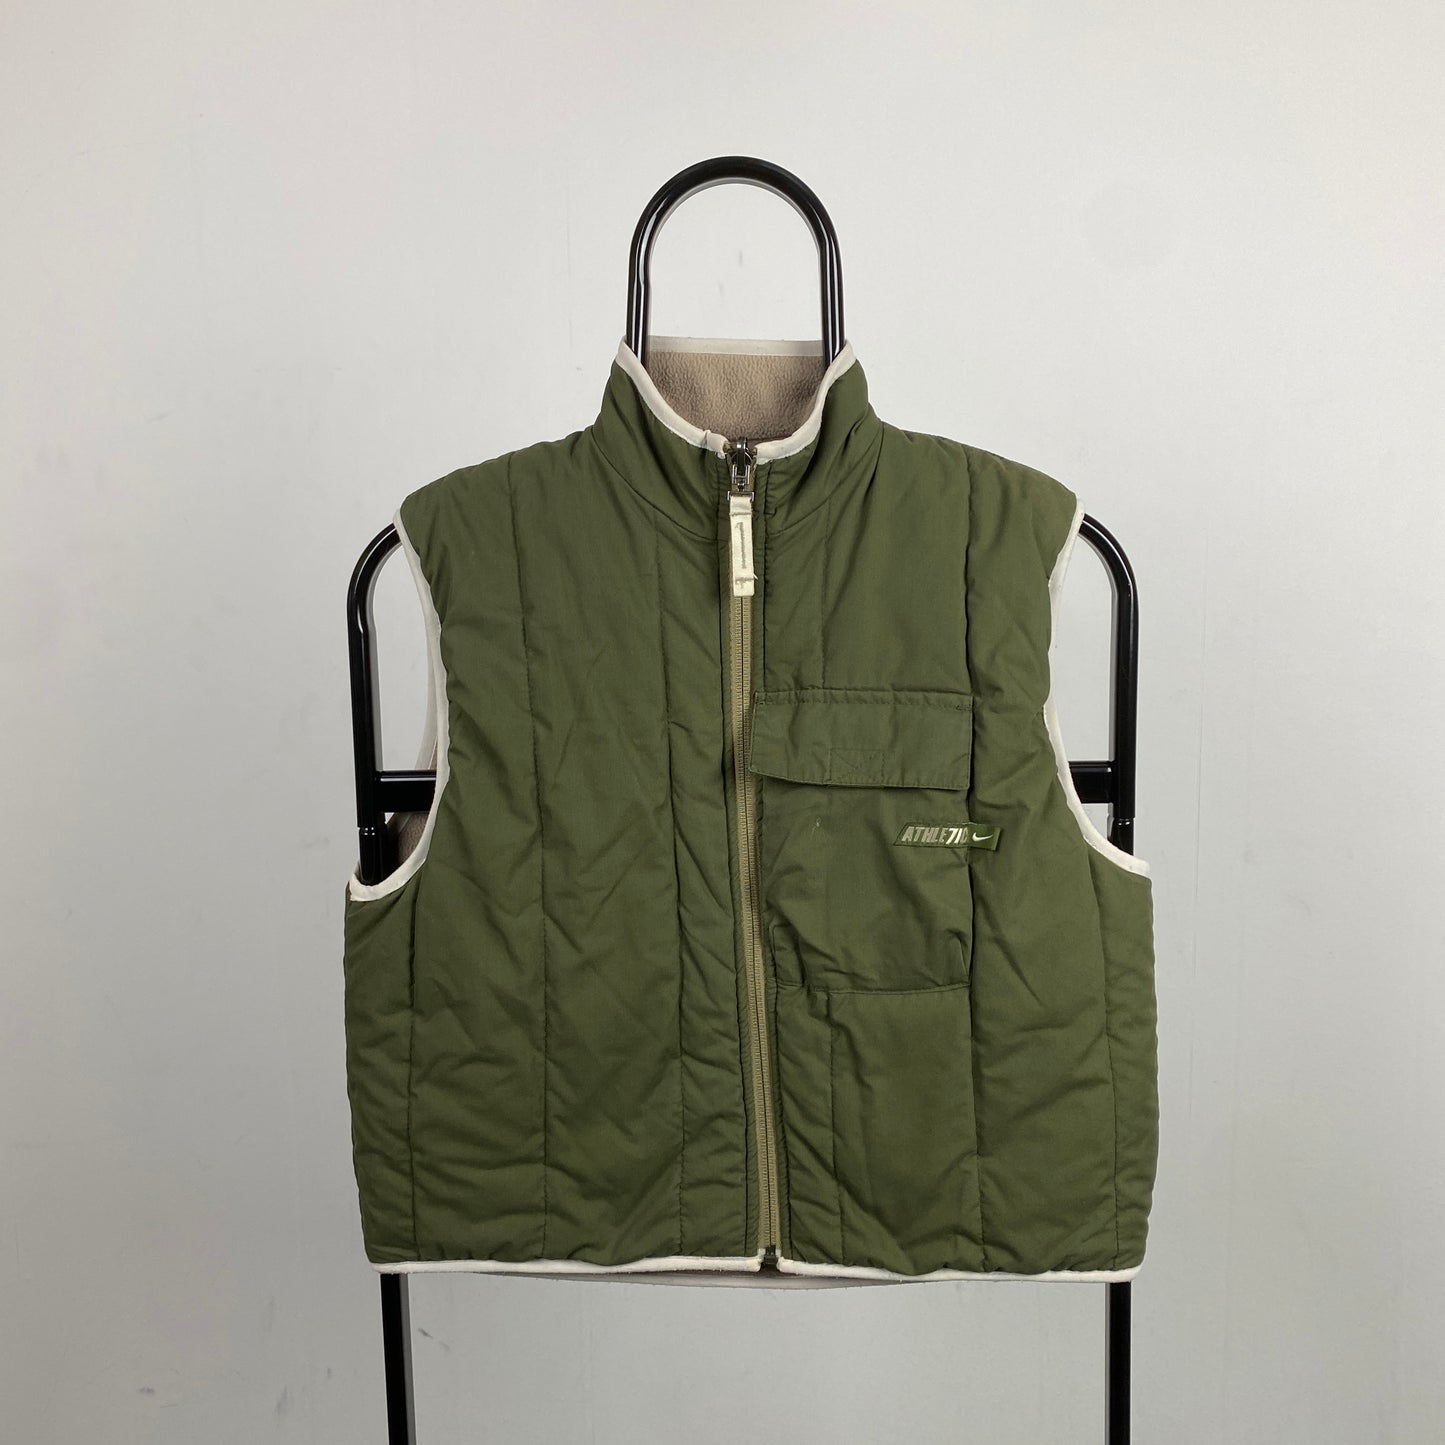 00s Nike Reversible Fleece Gilet Jacket Brown Green XS